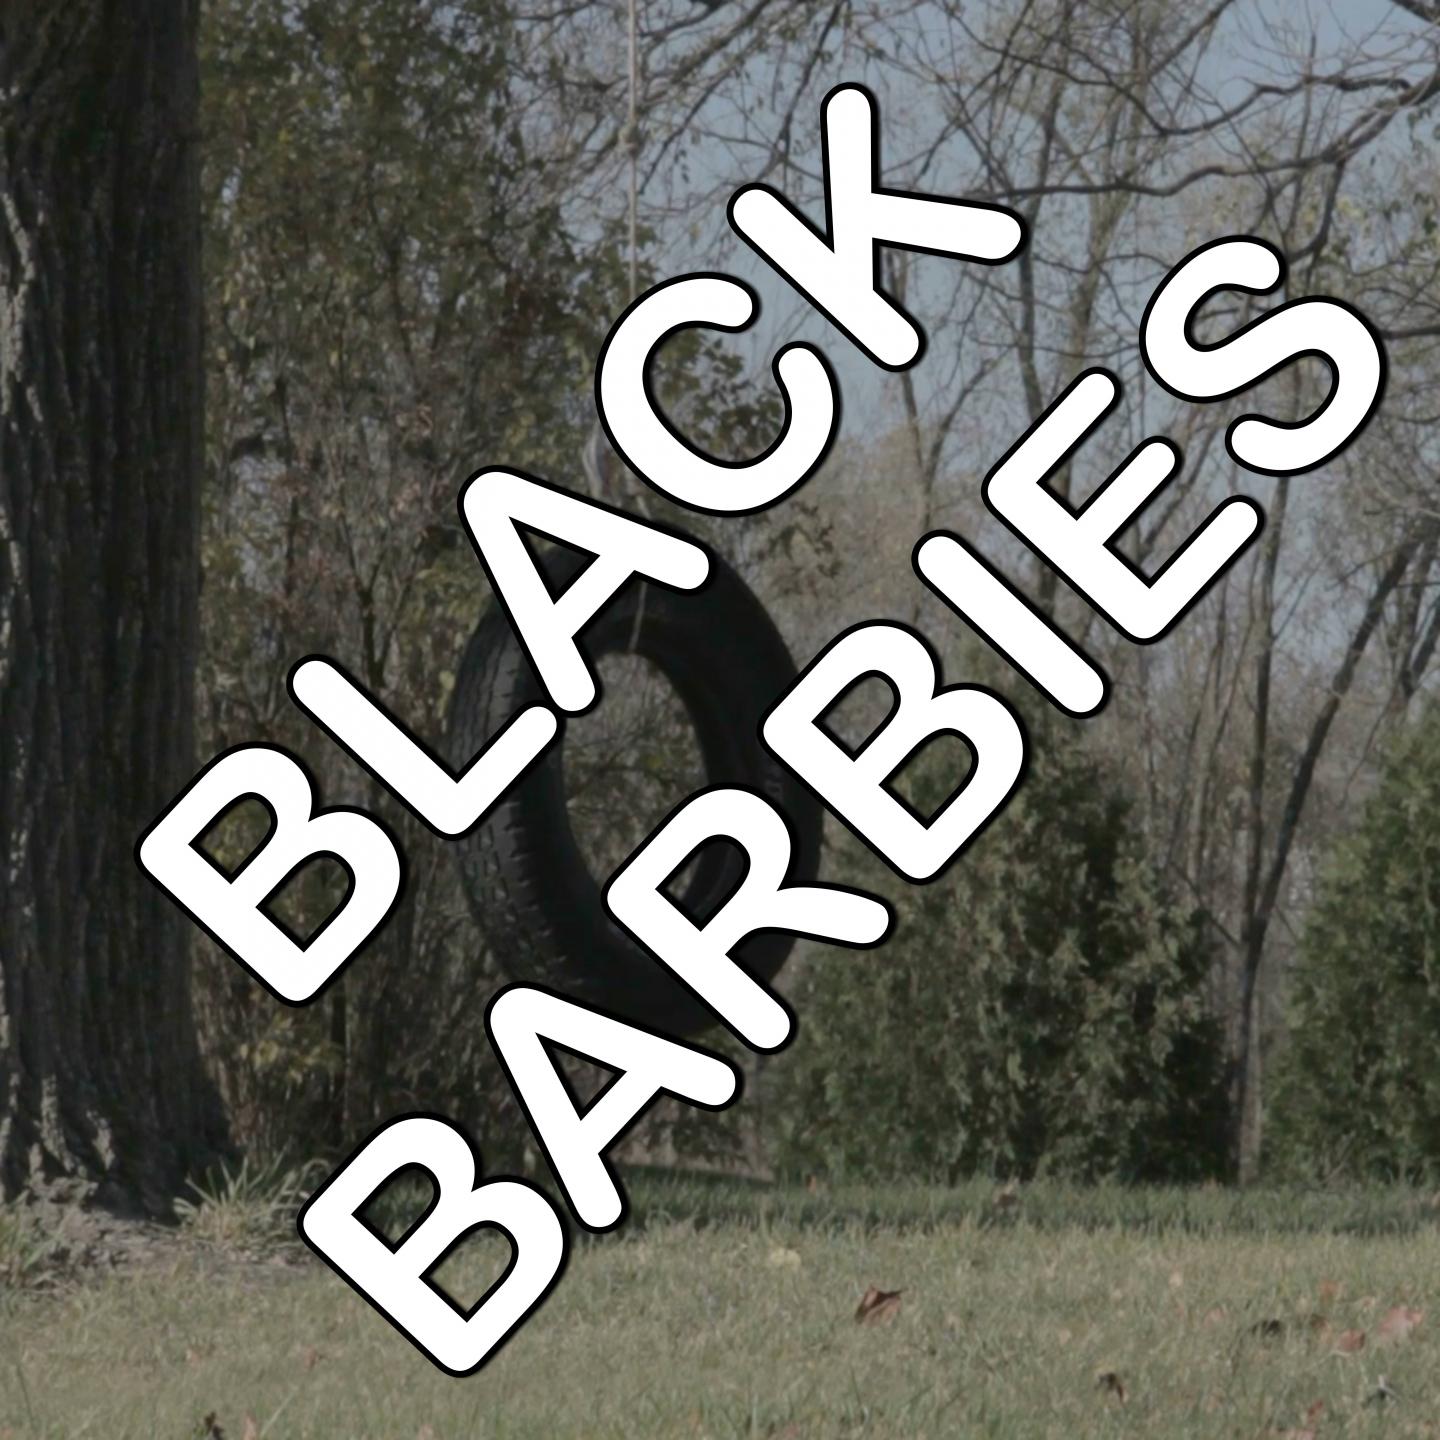 Black Barbies - Tribute to Nicki Minaj and Mike Will Made-It